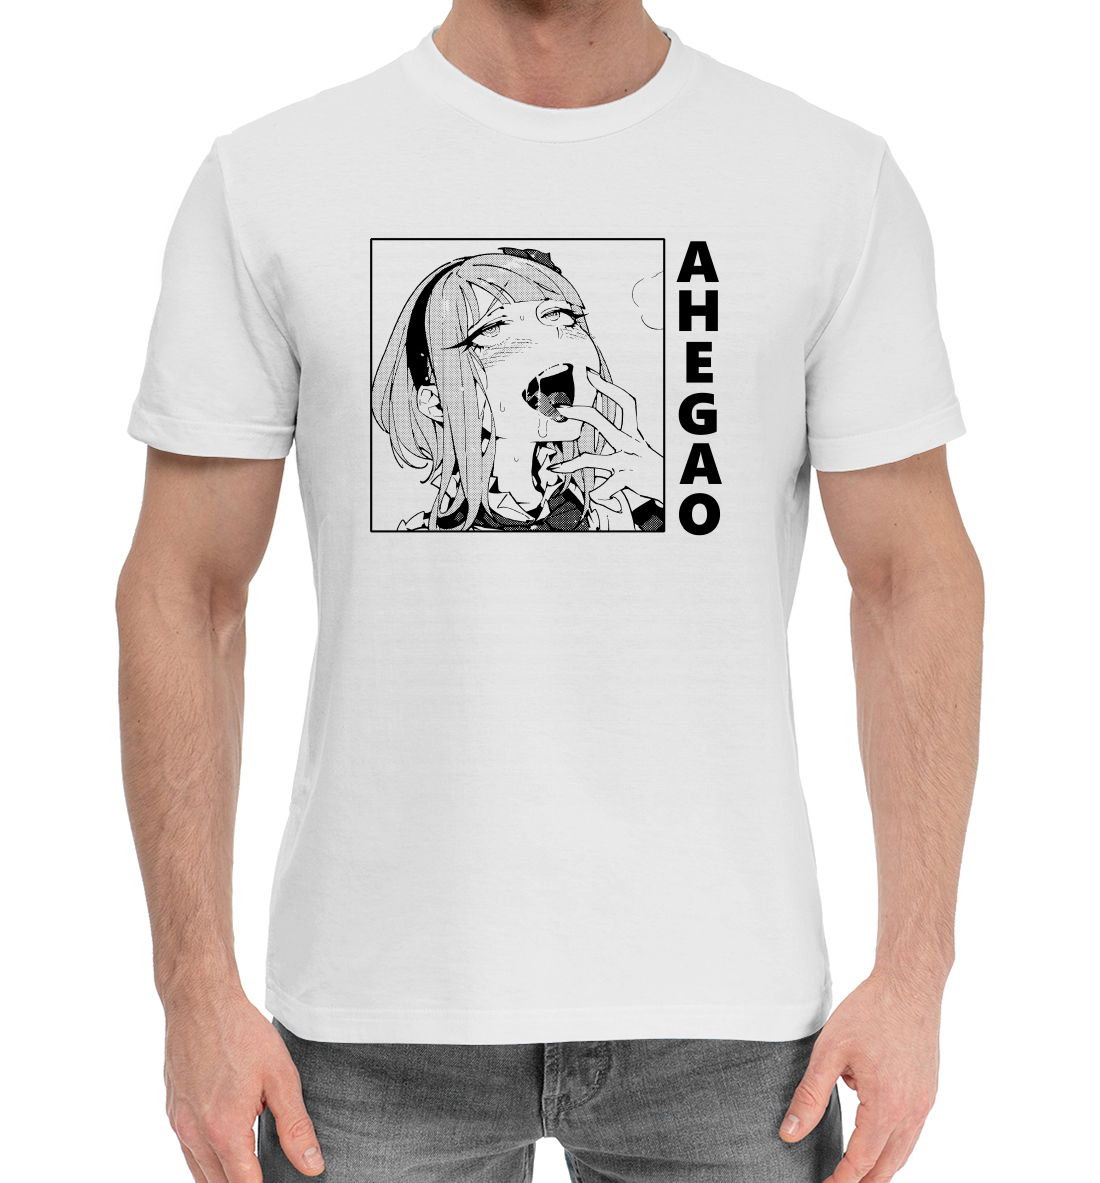 Мужская Хлопковая футболка с принтом Ahegao, артикул AHG-430907-hfu-2mp